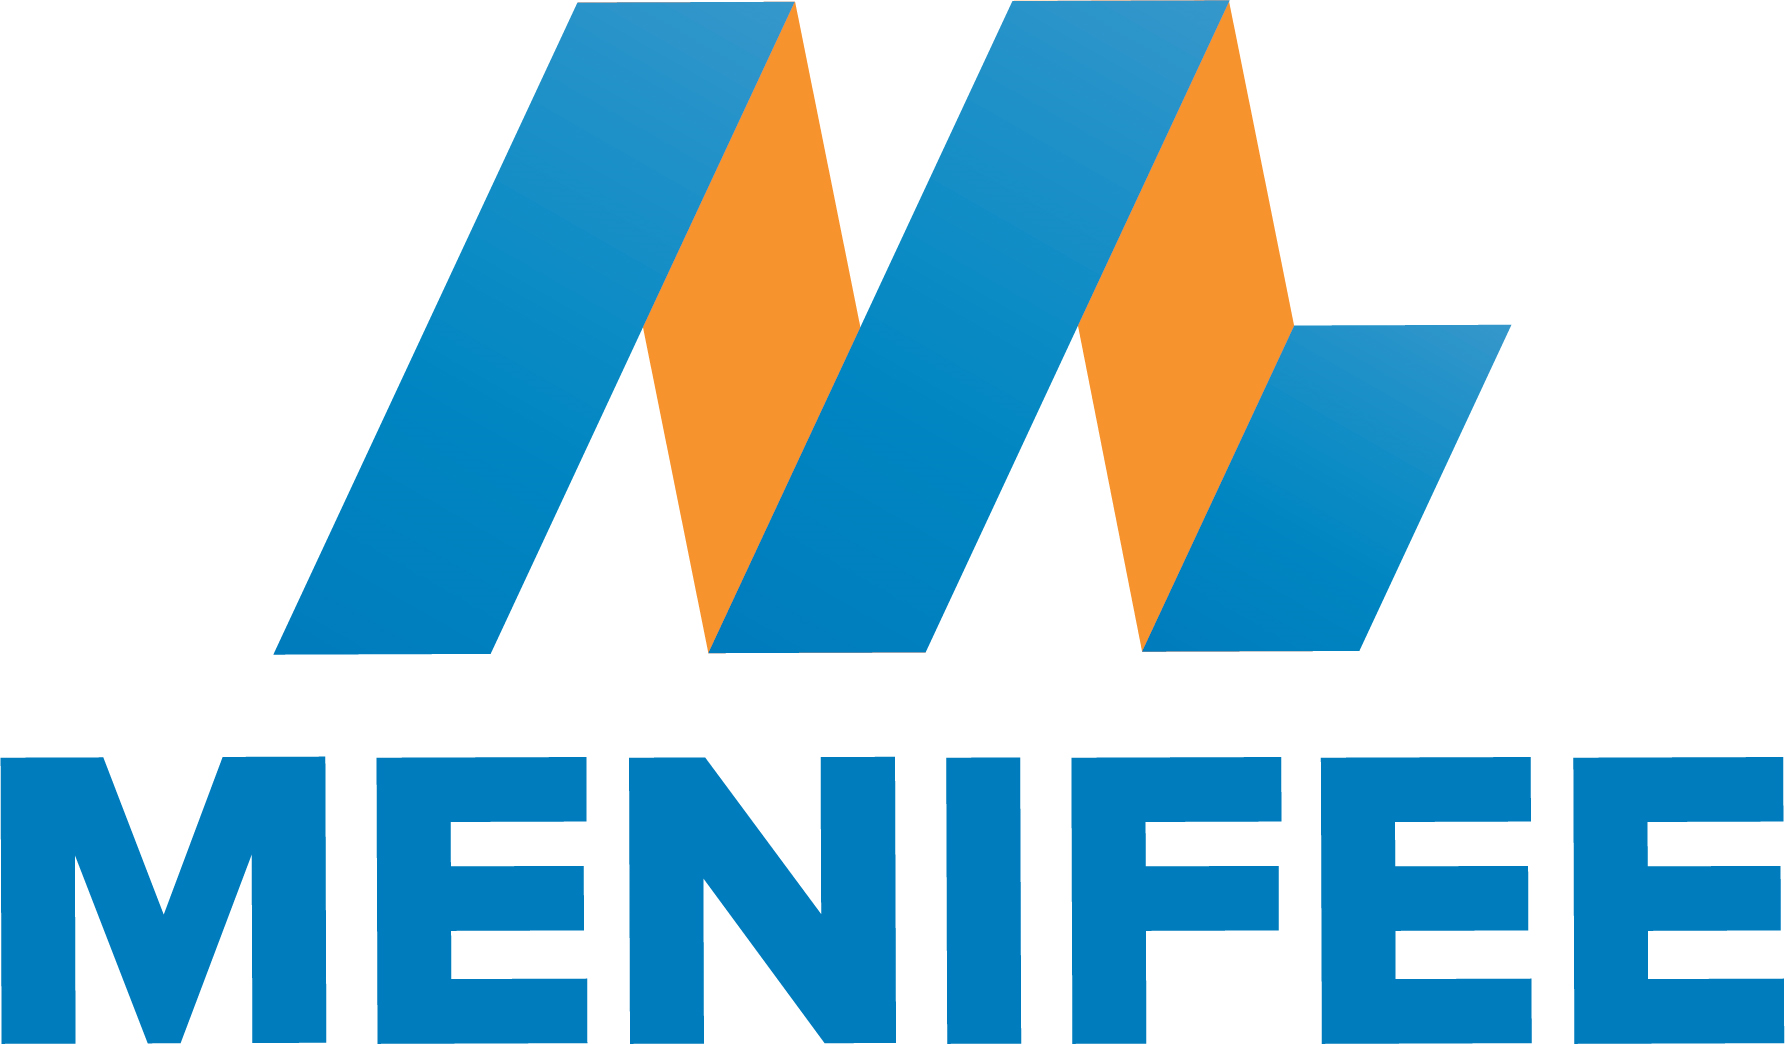 City of Menifee logo